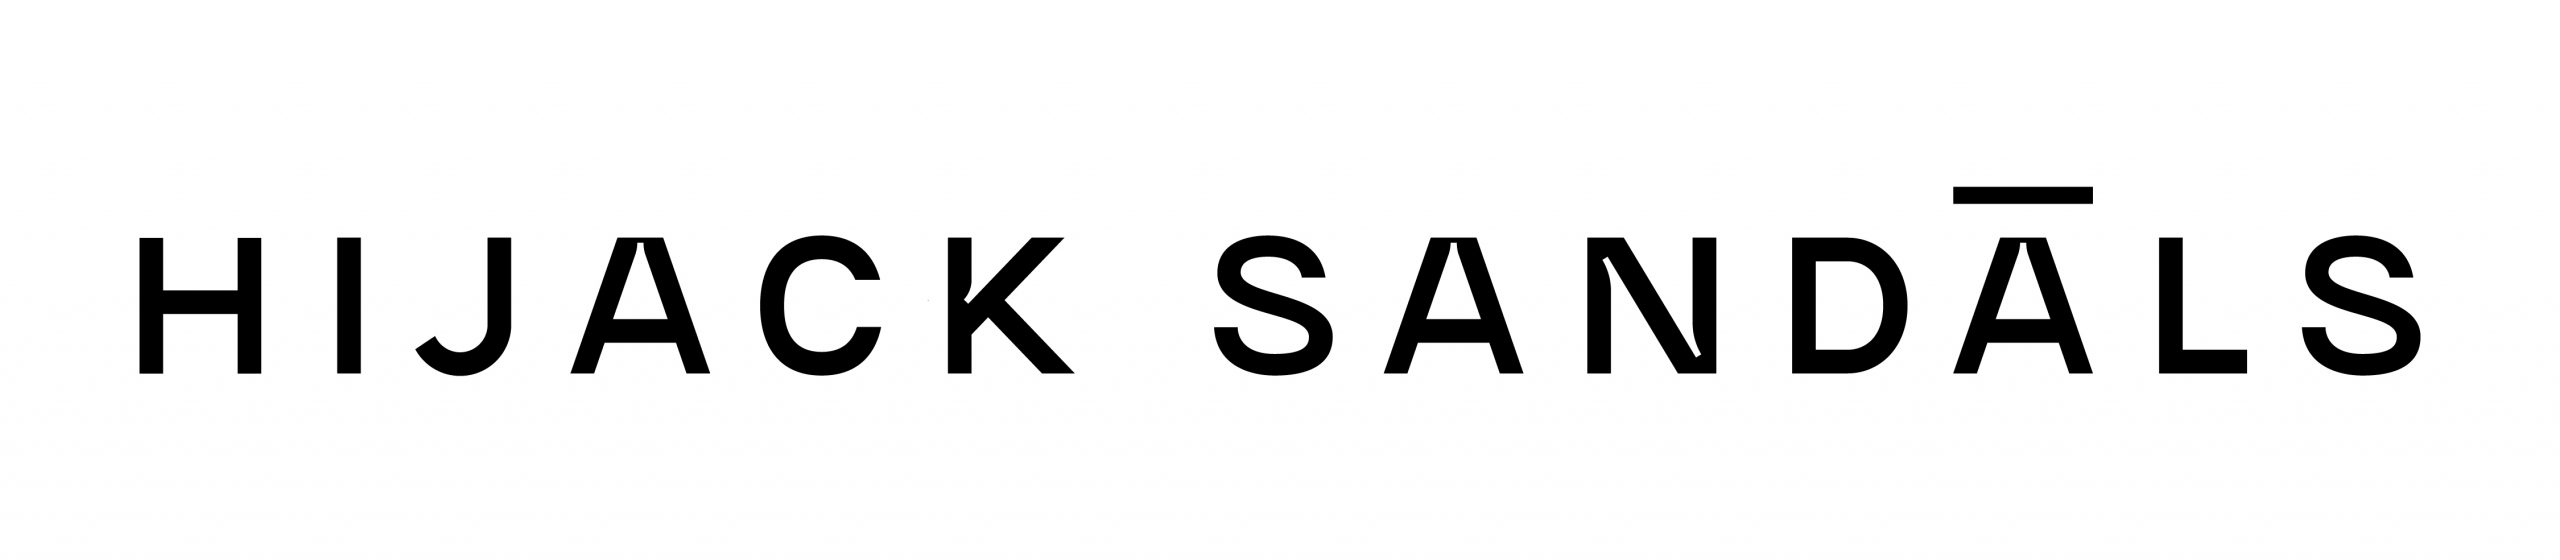 Hijack Sandals Logo